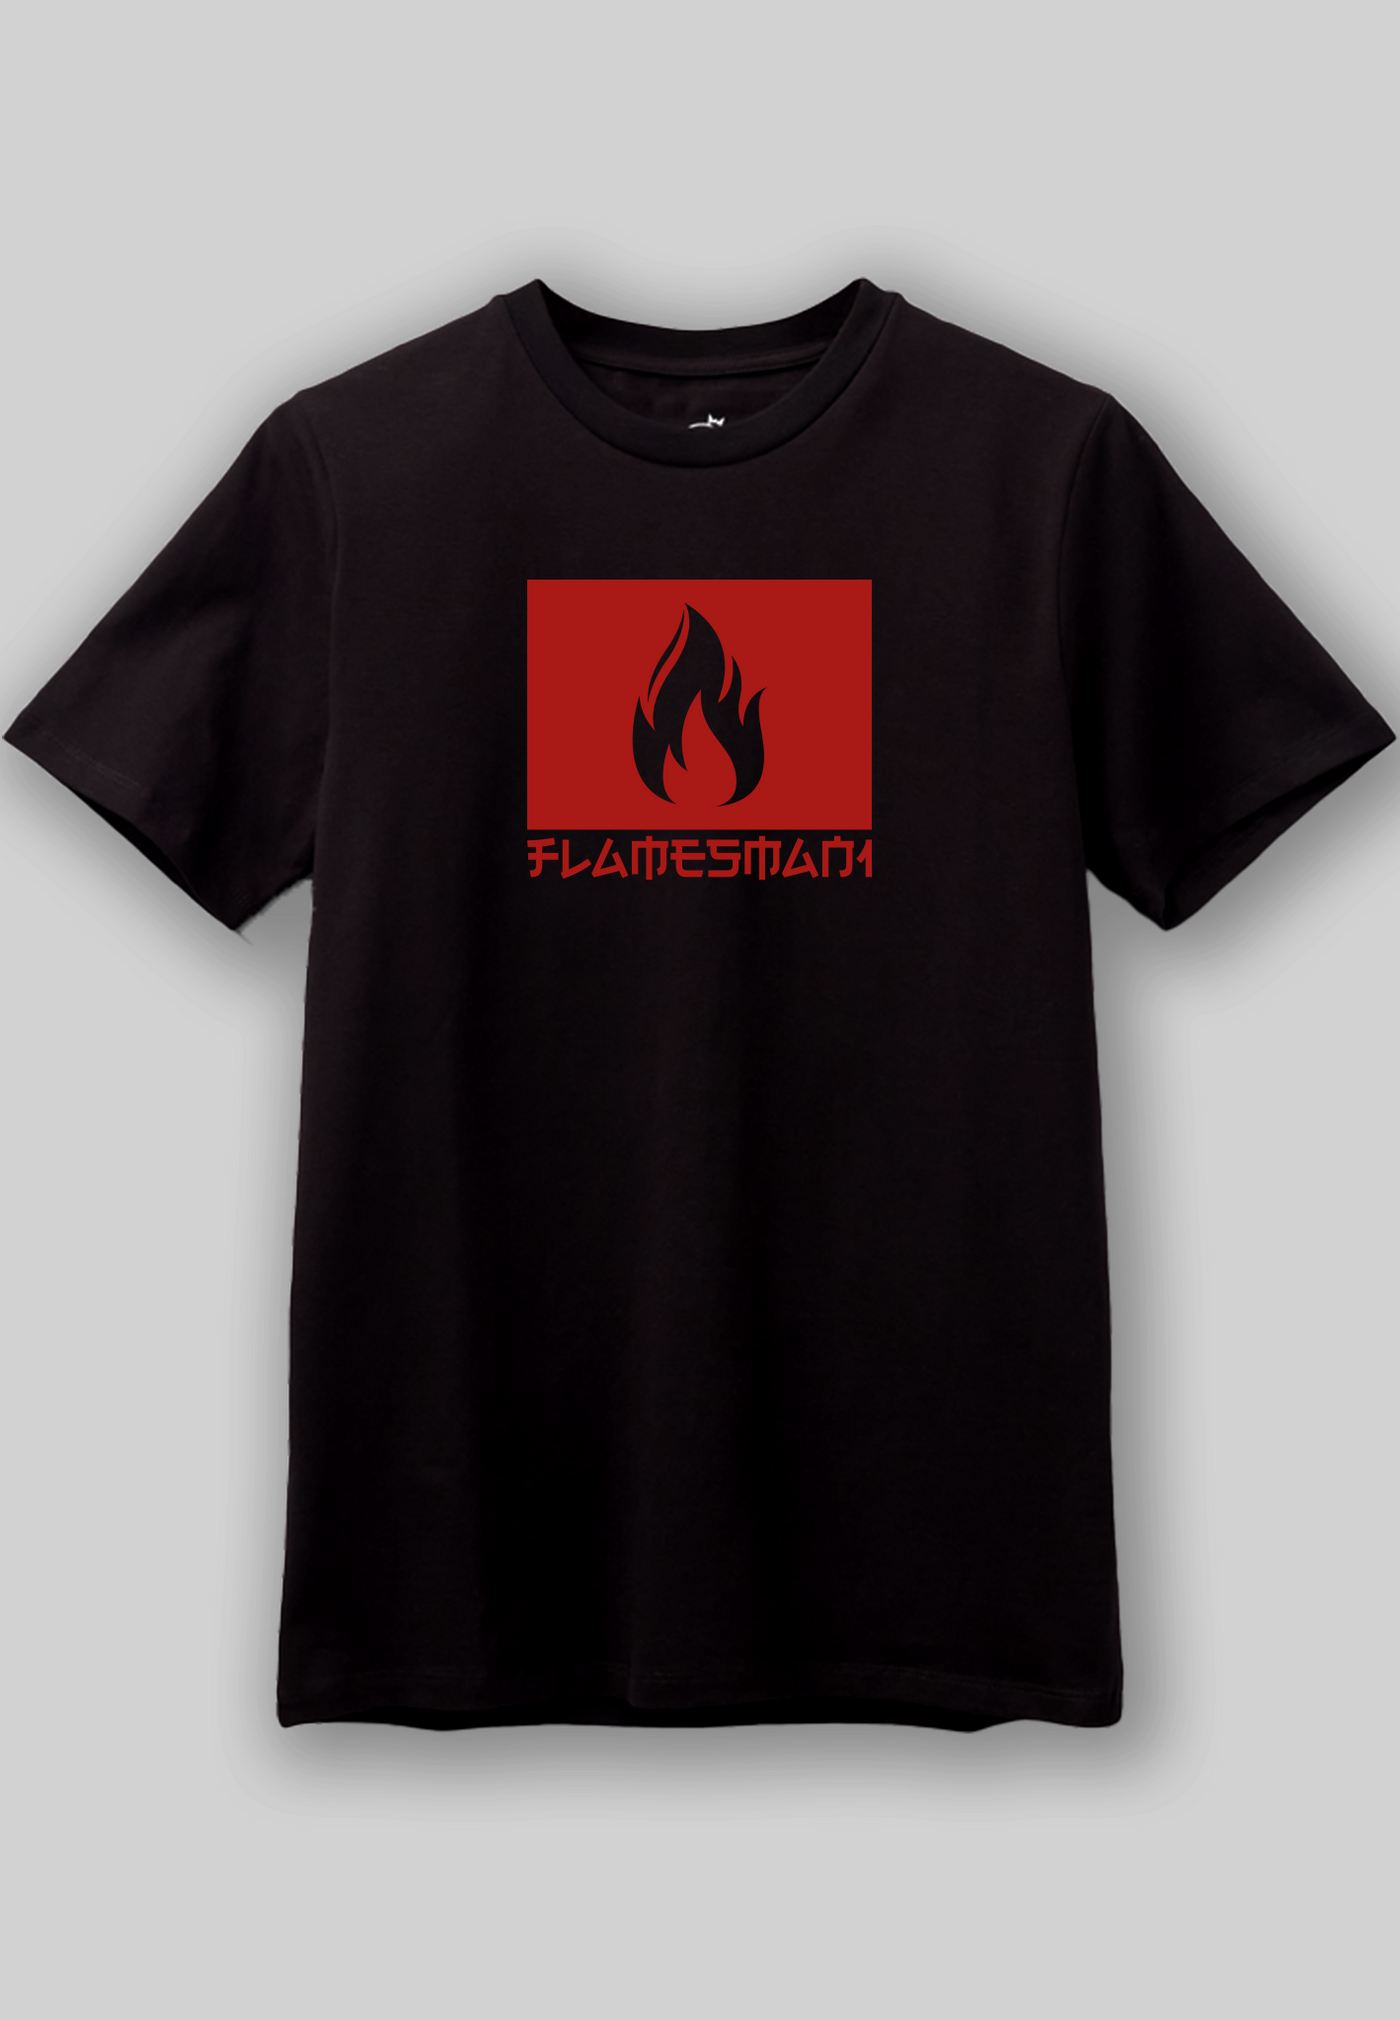 Flamesman1 - 2.0 Fire / Black Tee